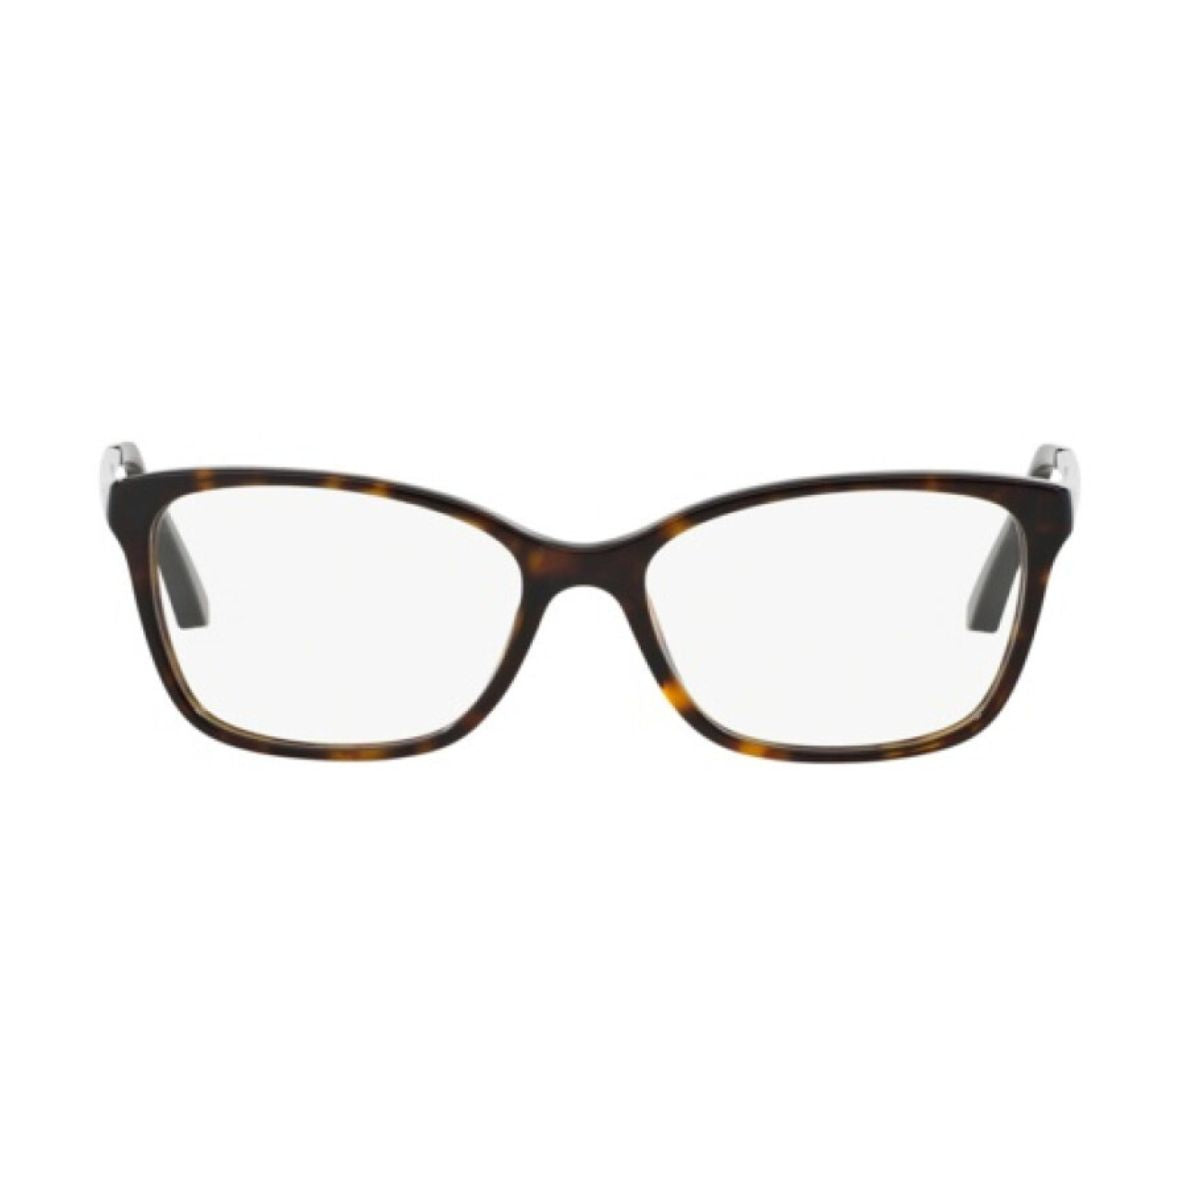 "Emporio Armani 3026 5026 cateye glasses frame for women's at optorium"